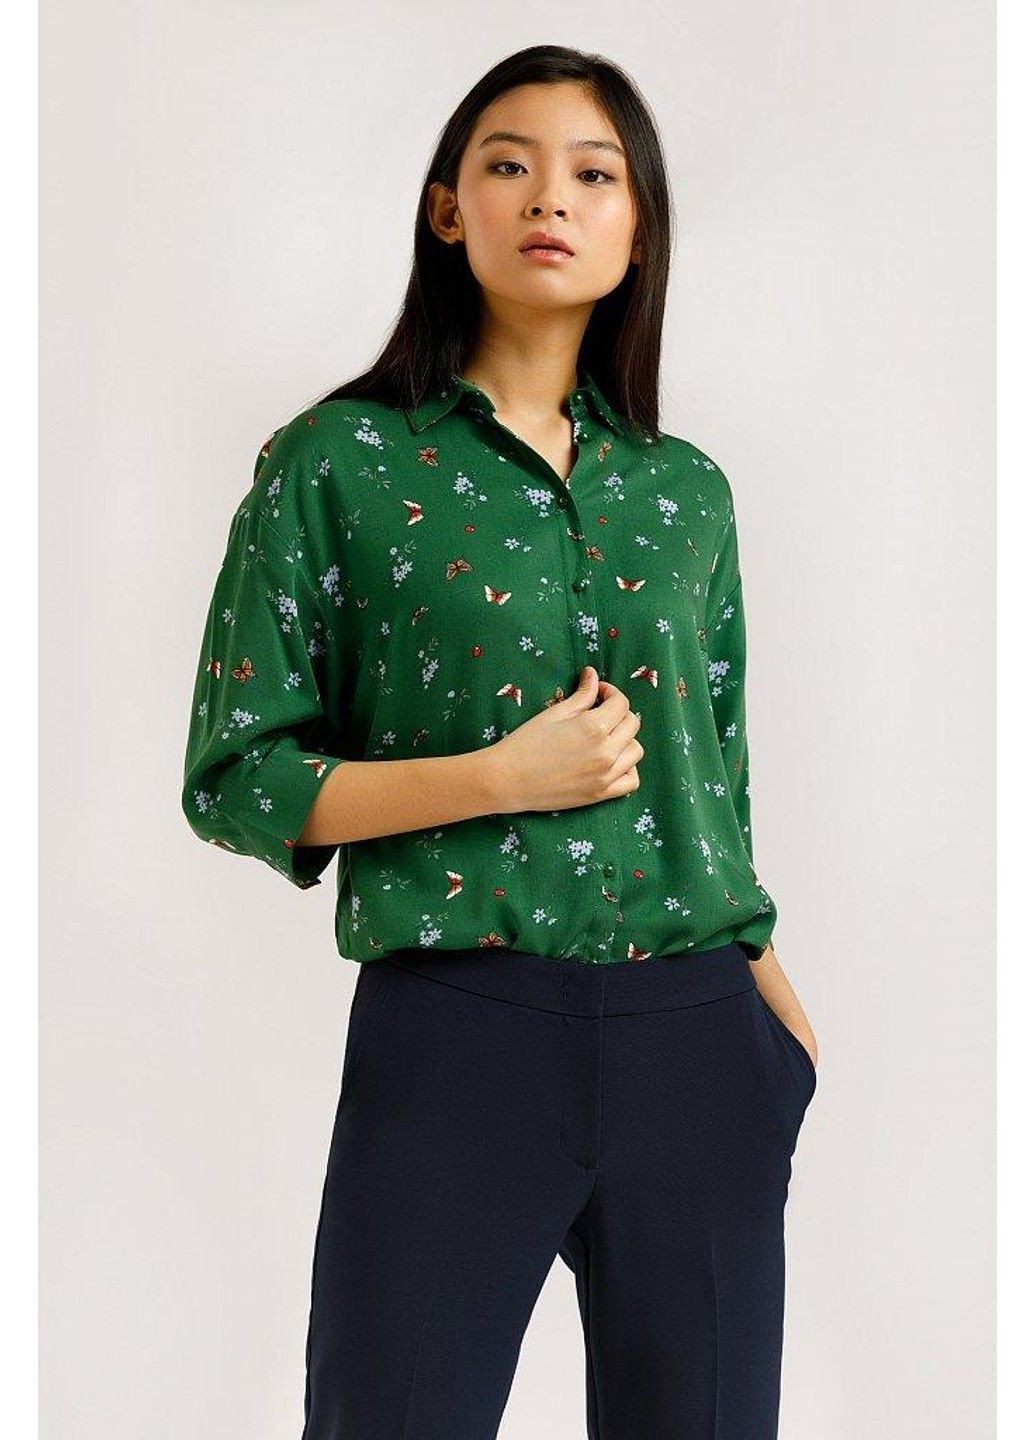 Зелена літня блузка b20-12054-500 Finn Flare